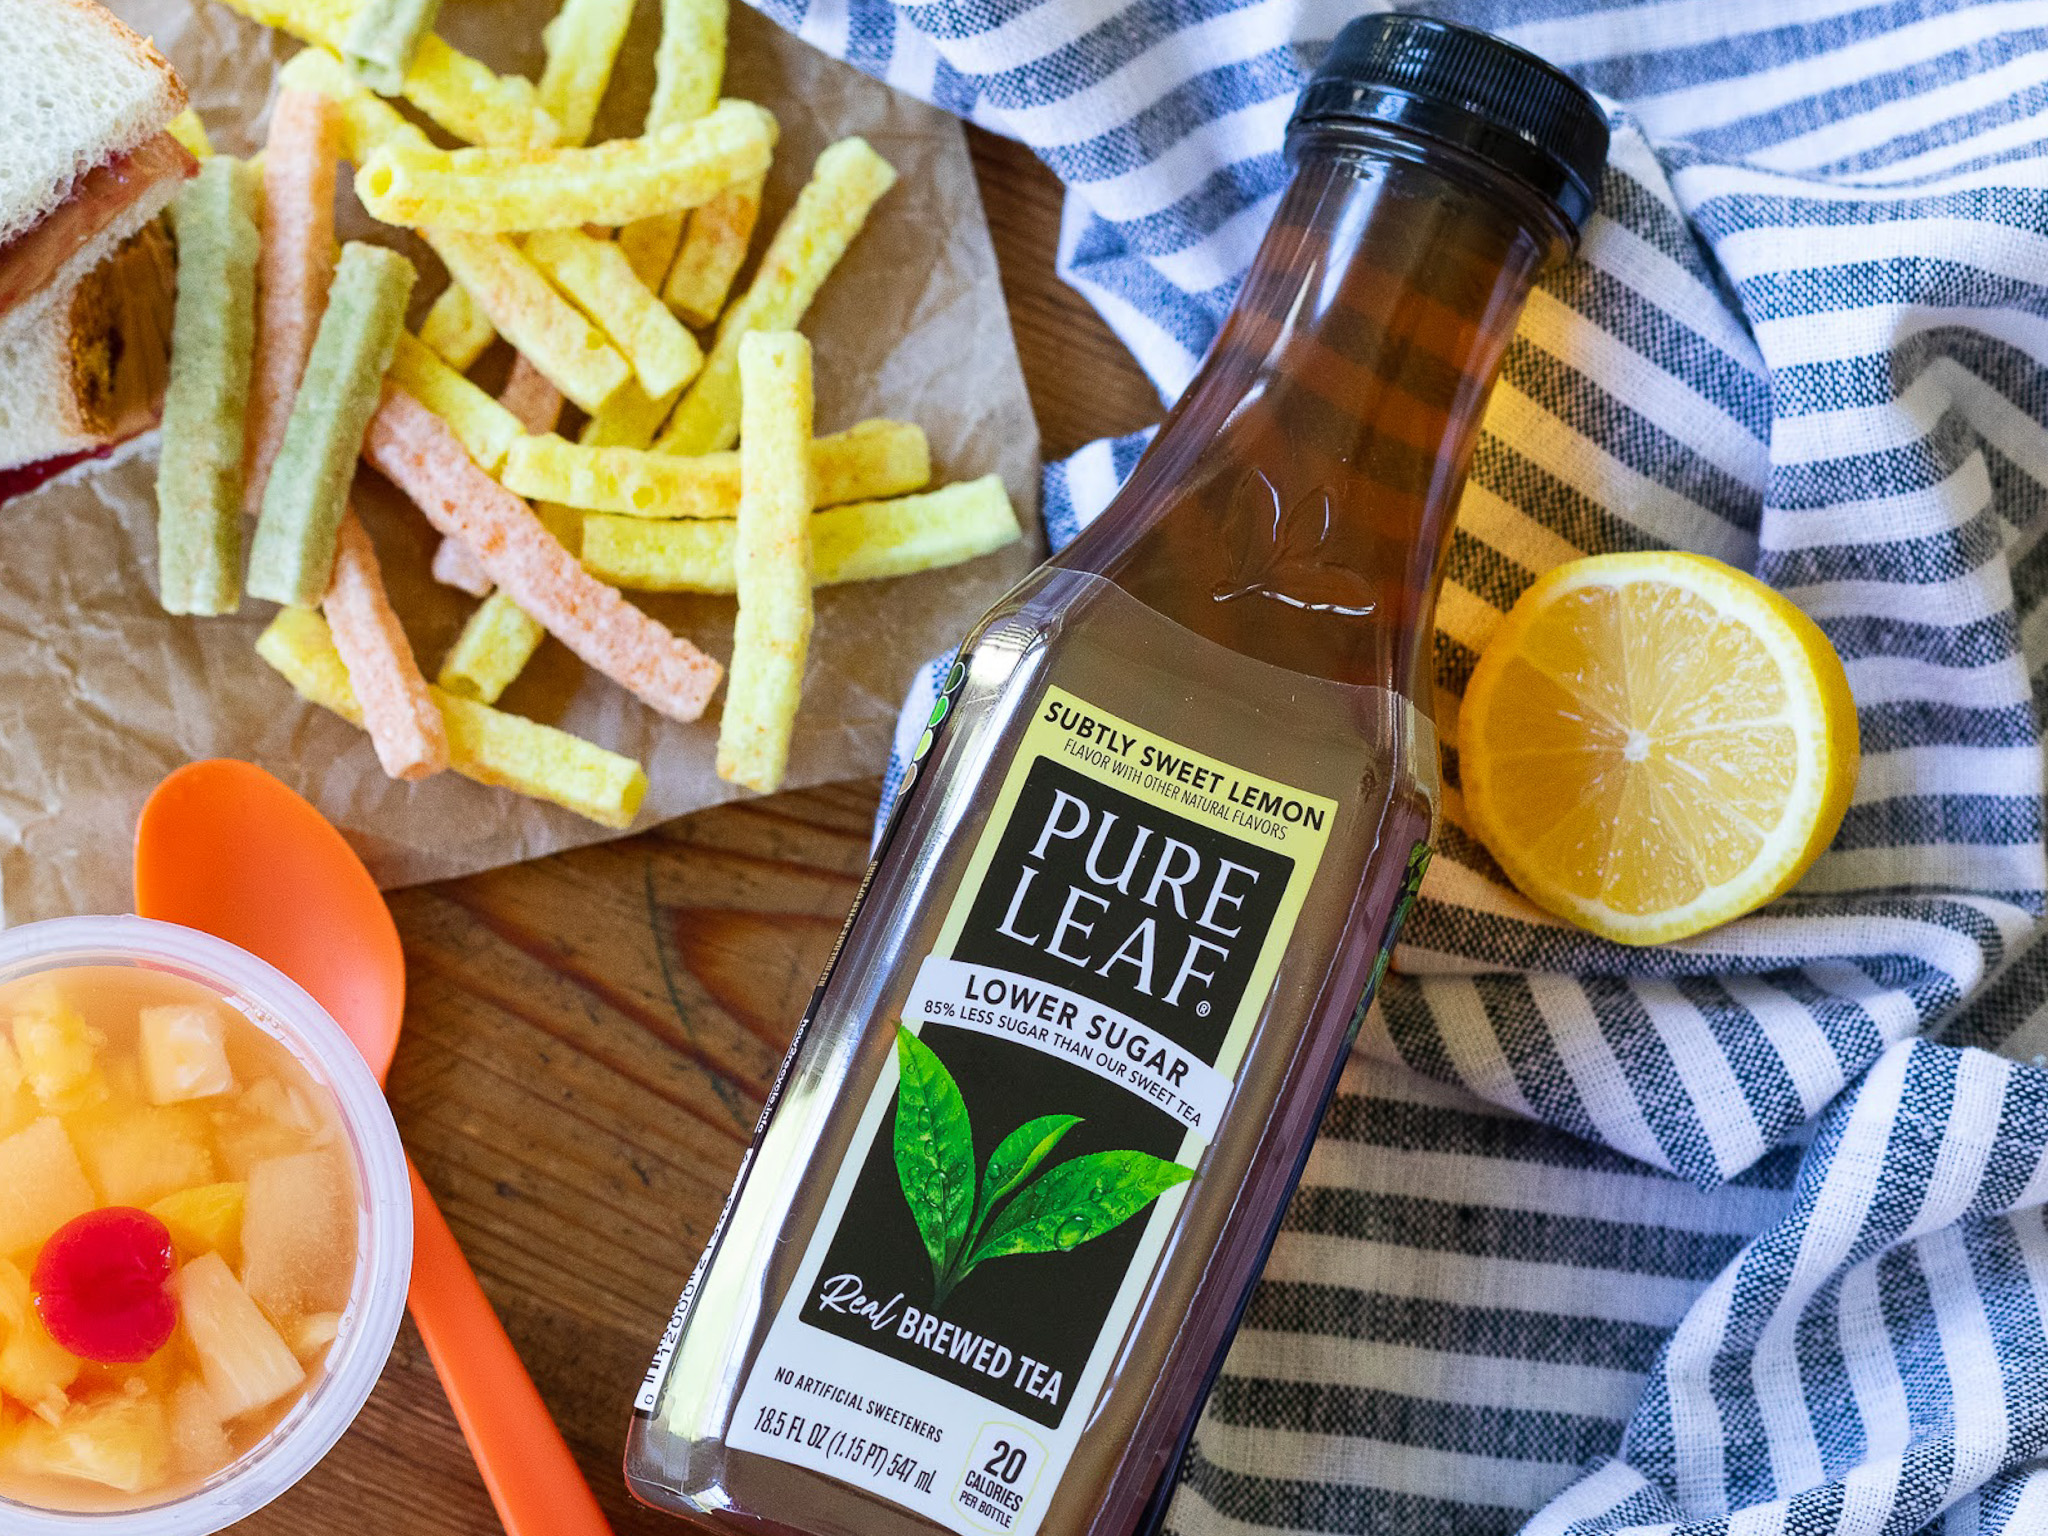 Get A FREE Bottle Of Subtly Sweet Pure Leaf Tea At Publix - iHeartPublix